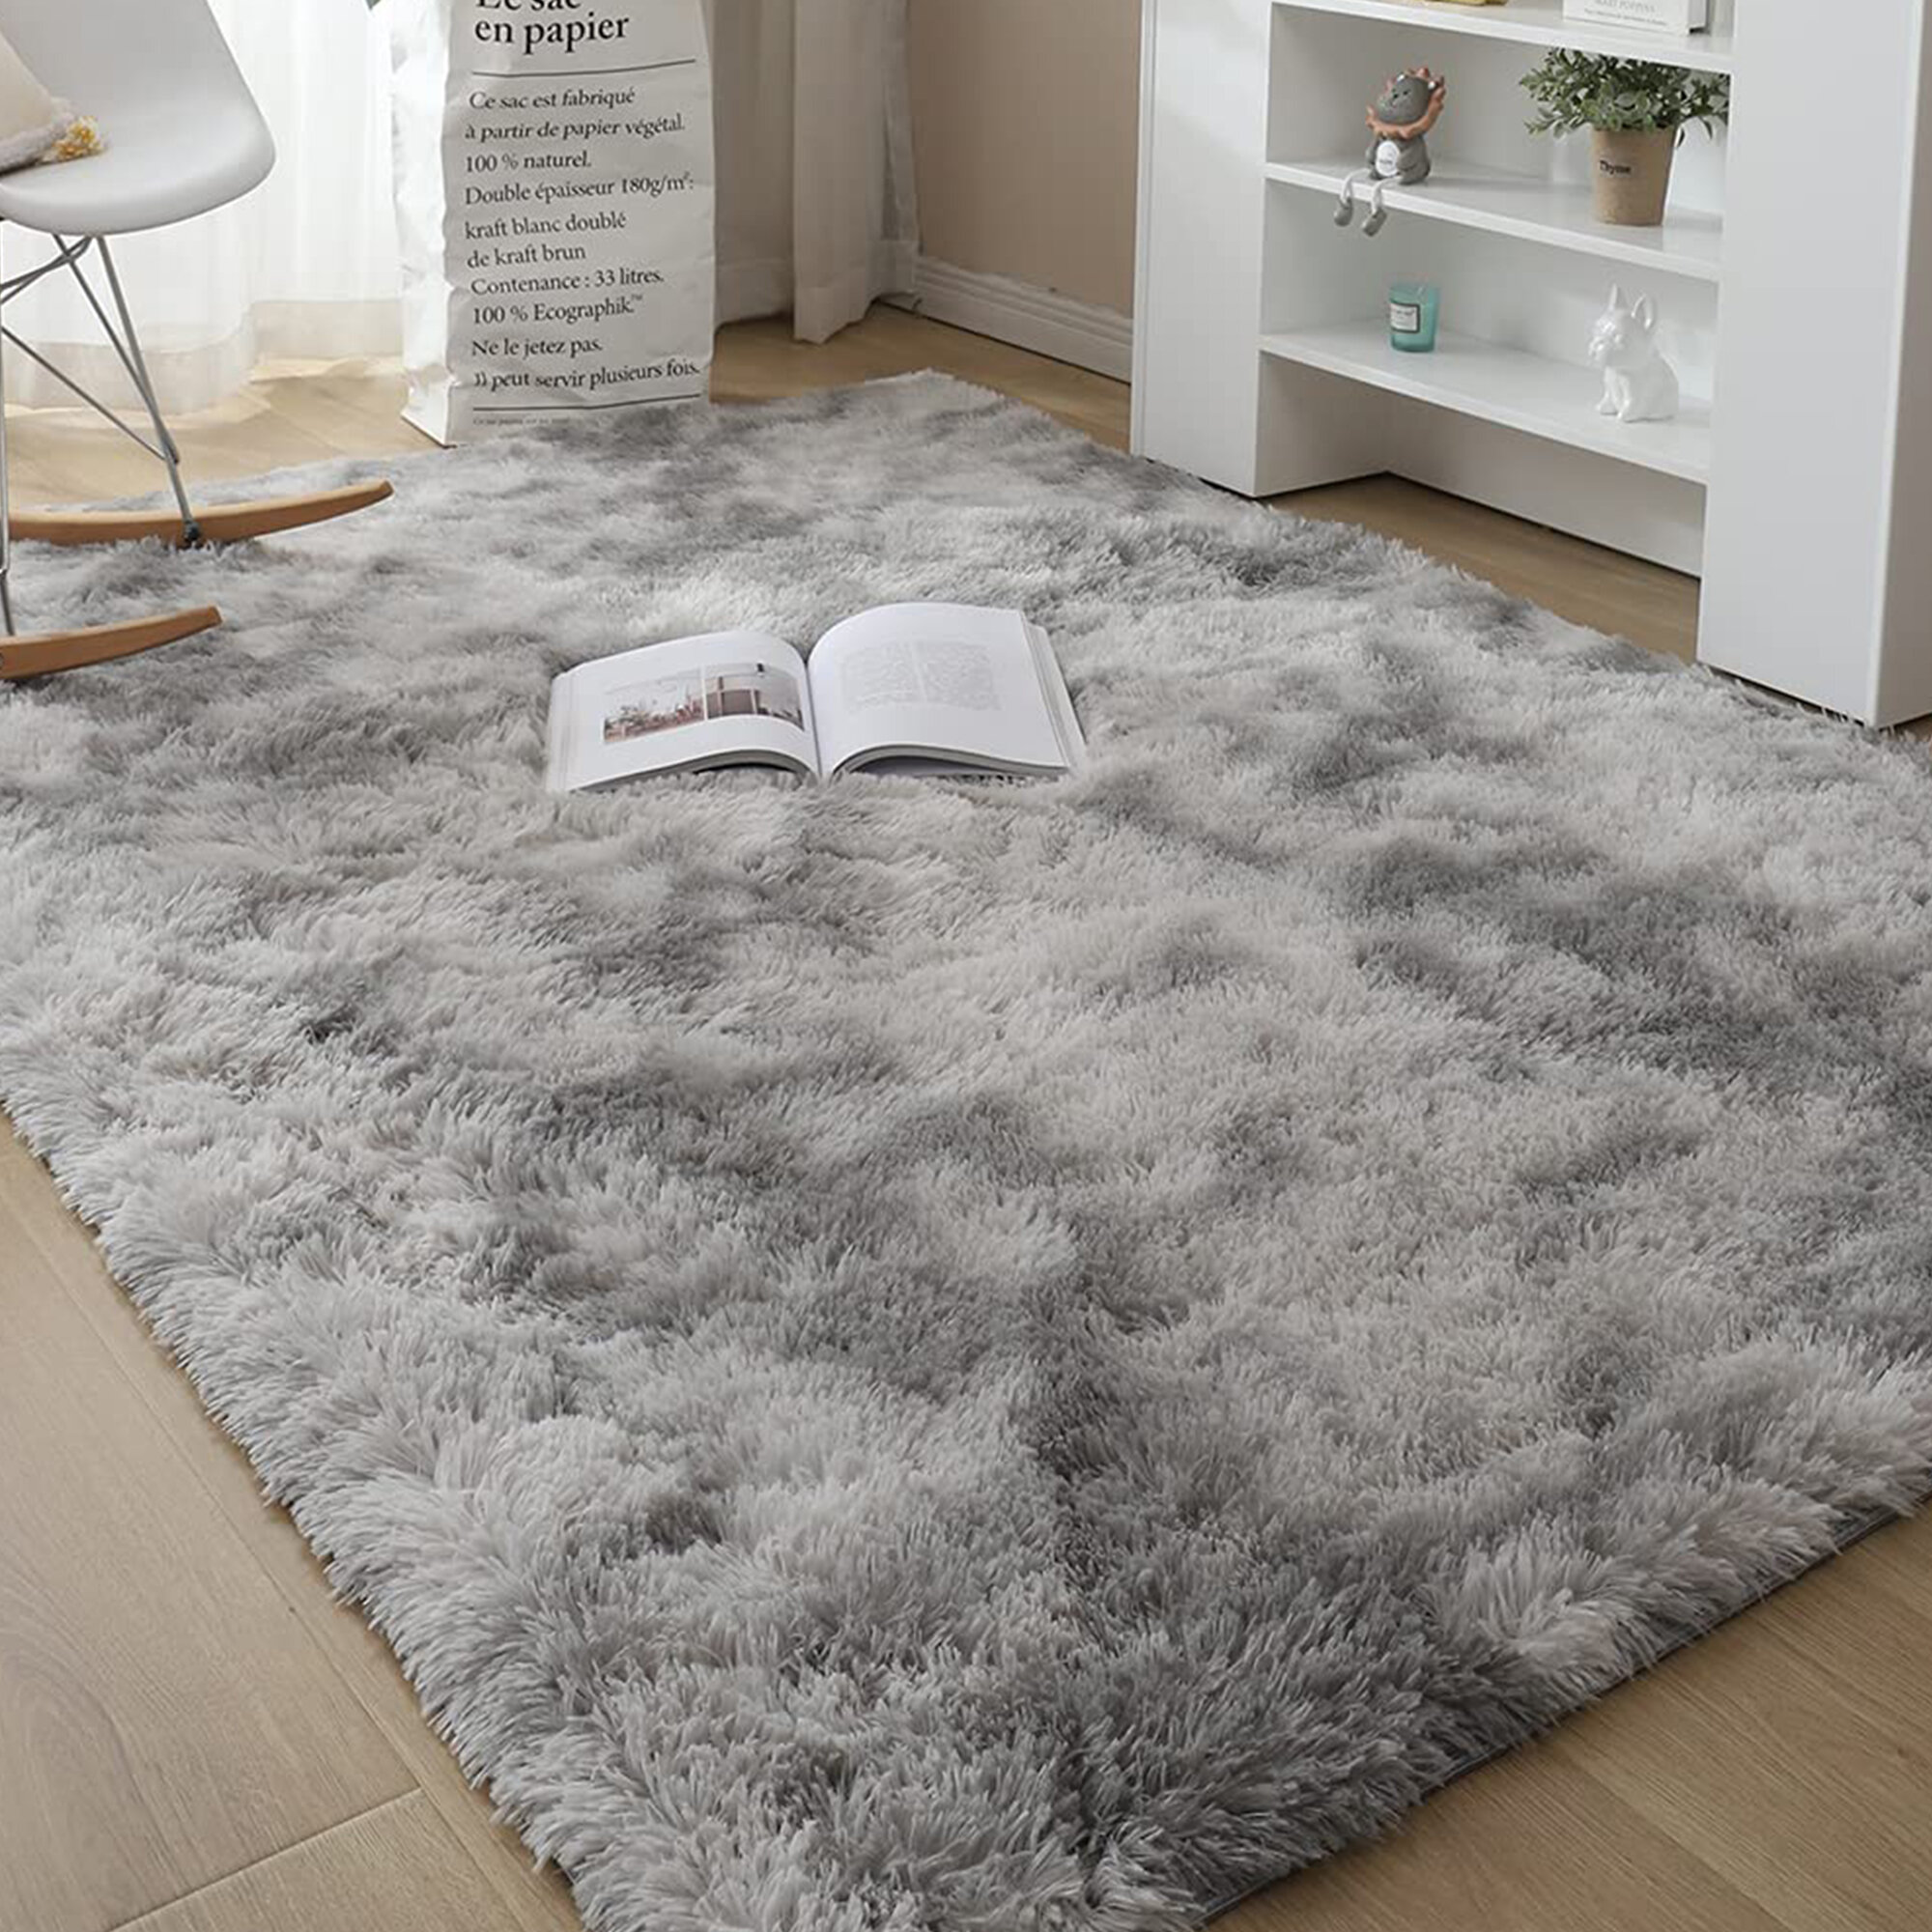 FUR ACCENTS SALE Large Black Shag Area Rug Carpet Rectangle All Sizes 